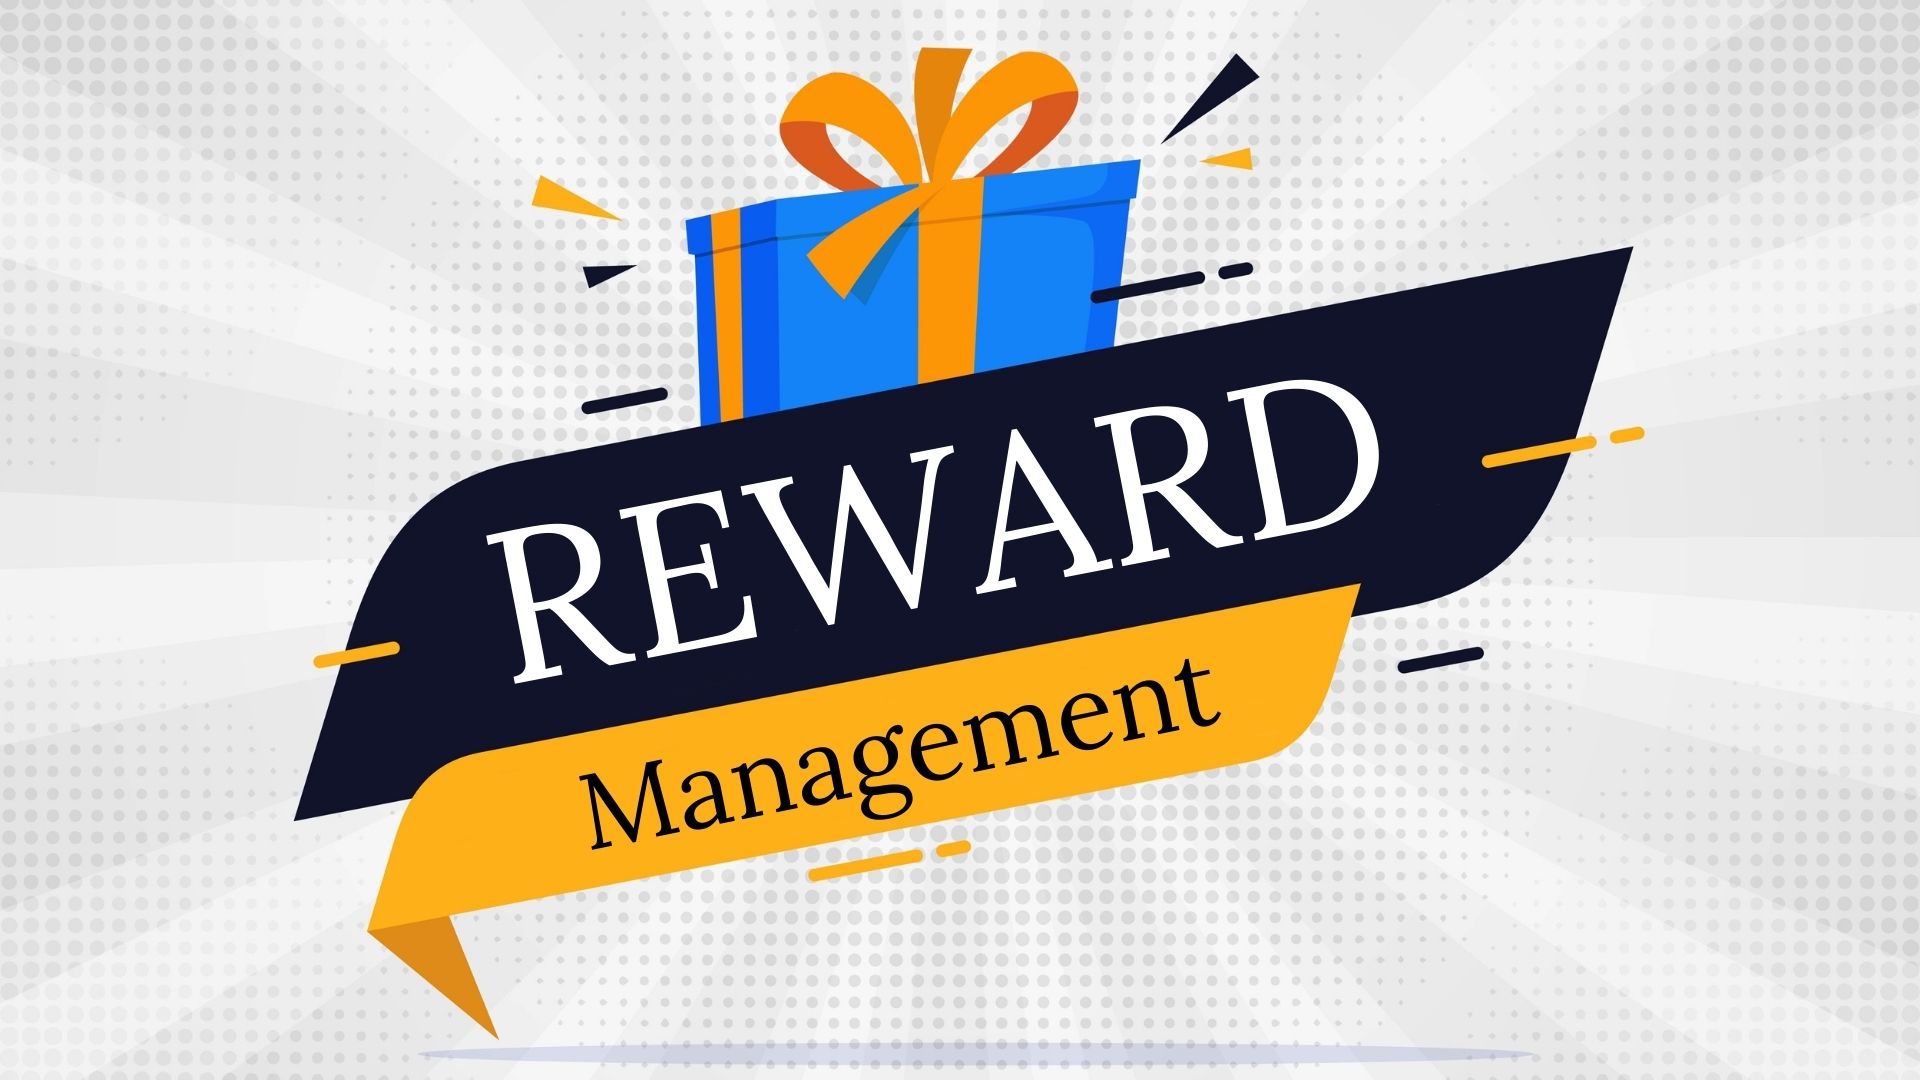 Reward Management - Definition, Types and Benefits | Marketing91